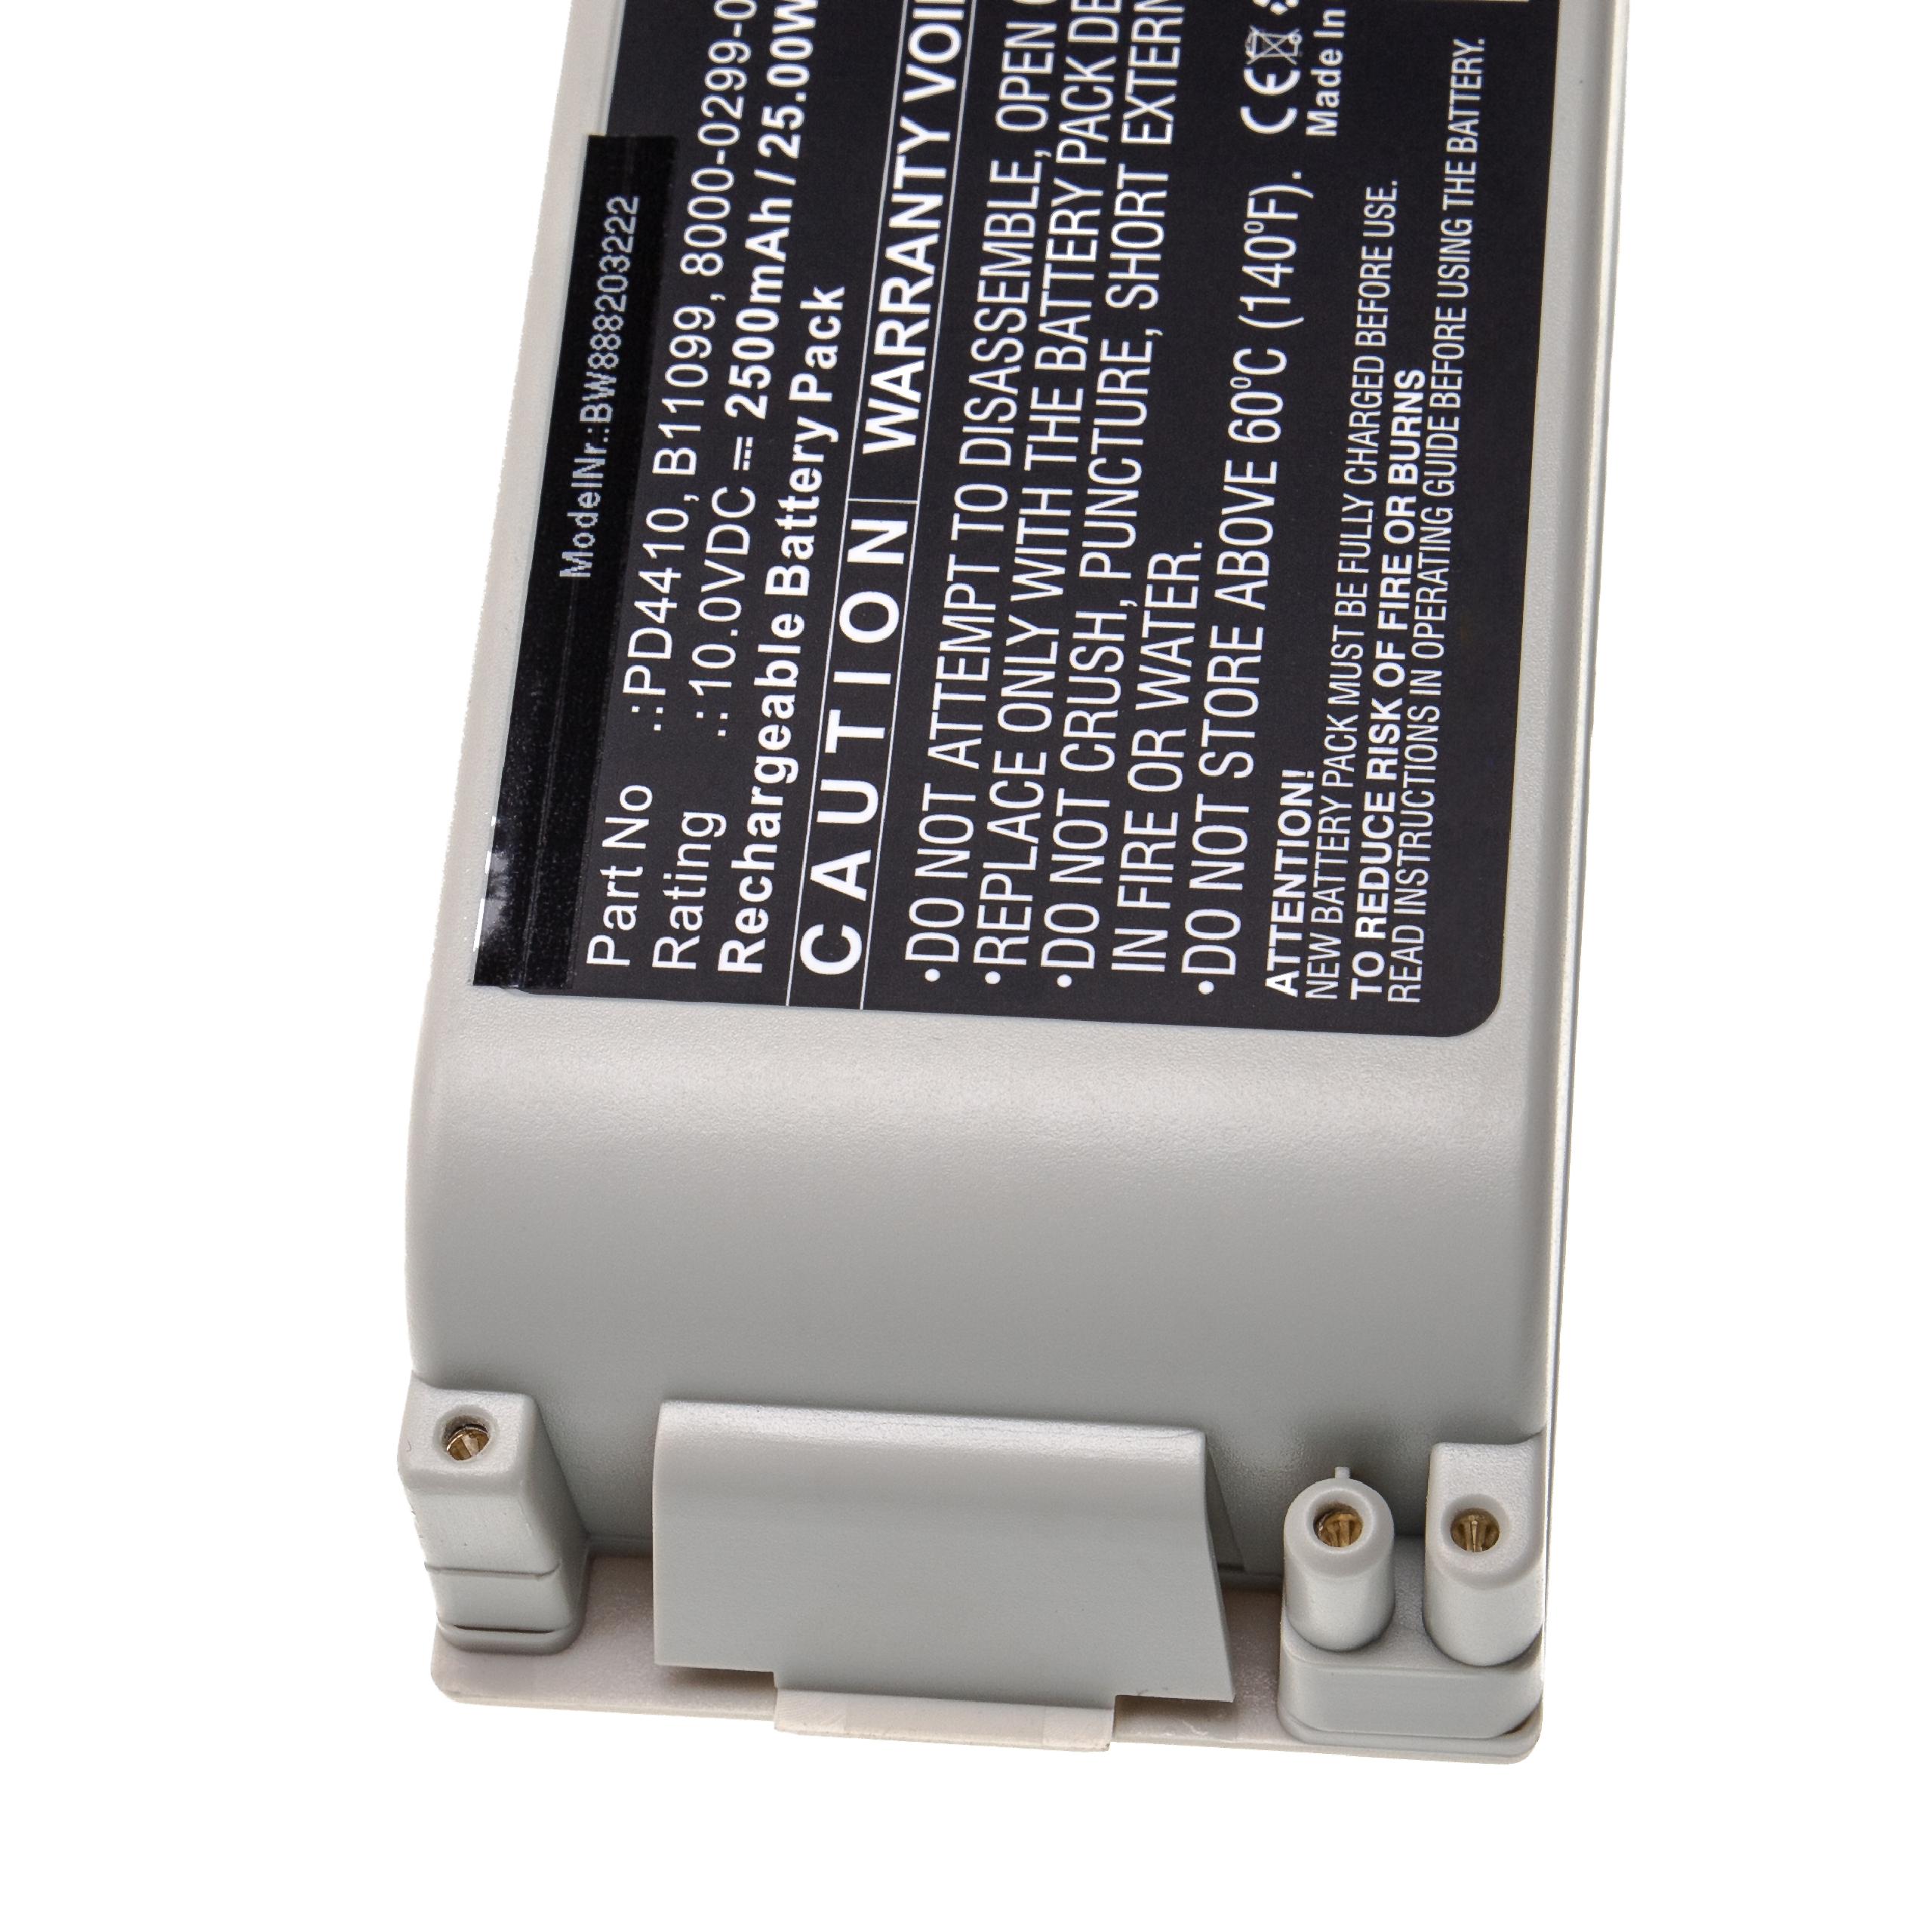 Akumulator zamiennik ZOLL 8000-0299-01, B11099, 8000-0299-10, 110087, PD4410 - 2500 mAh 10 V AGM